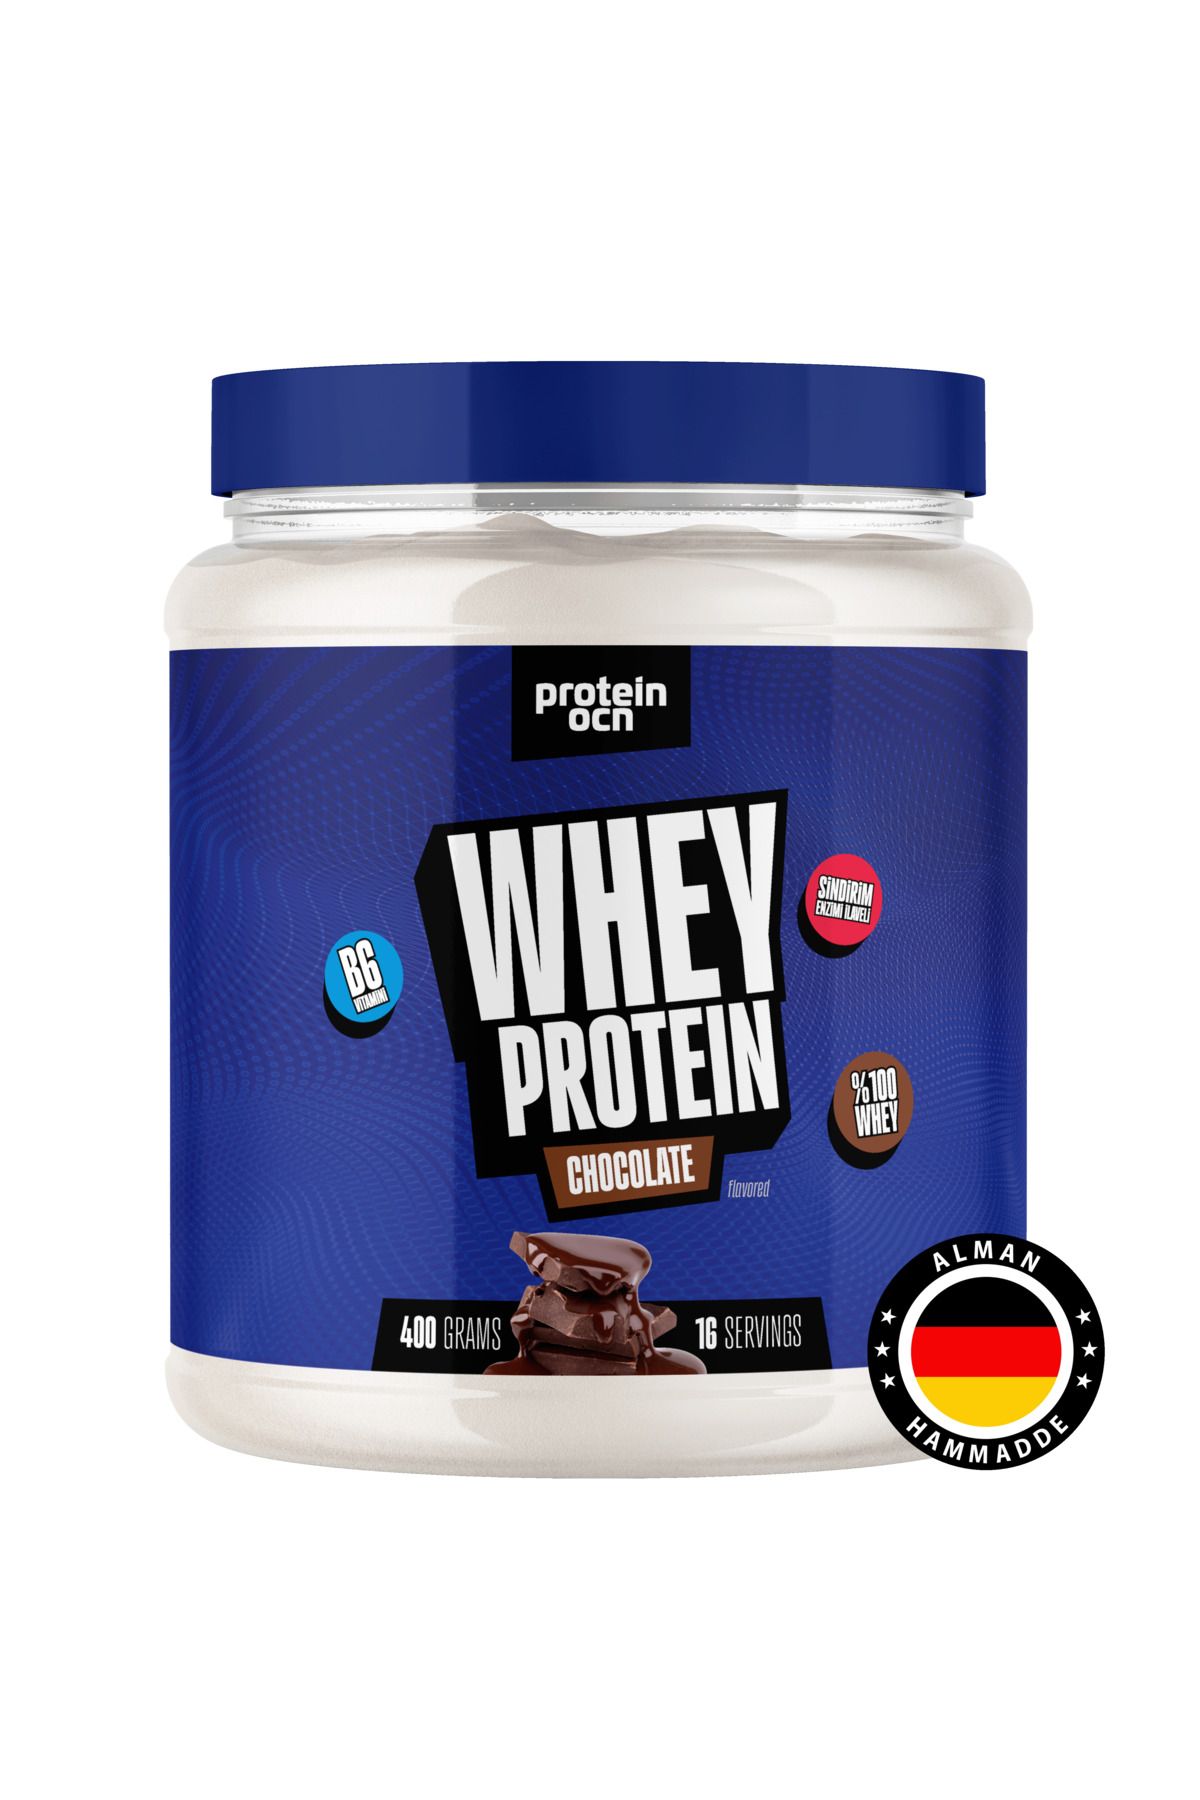 Proteinocean Whey Protein™ Çikolata 400g - 16 Servis